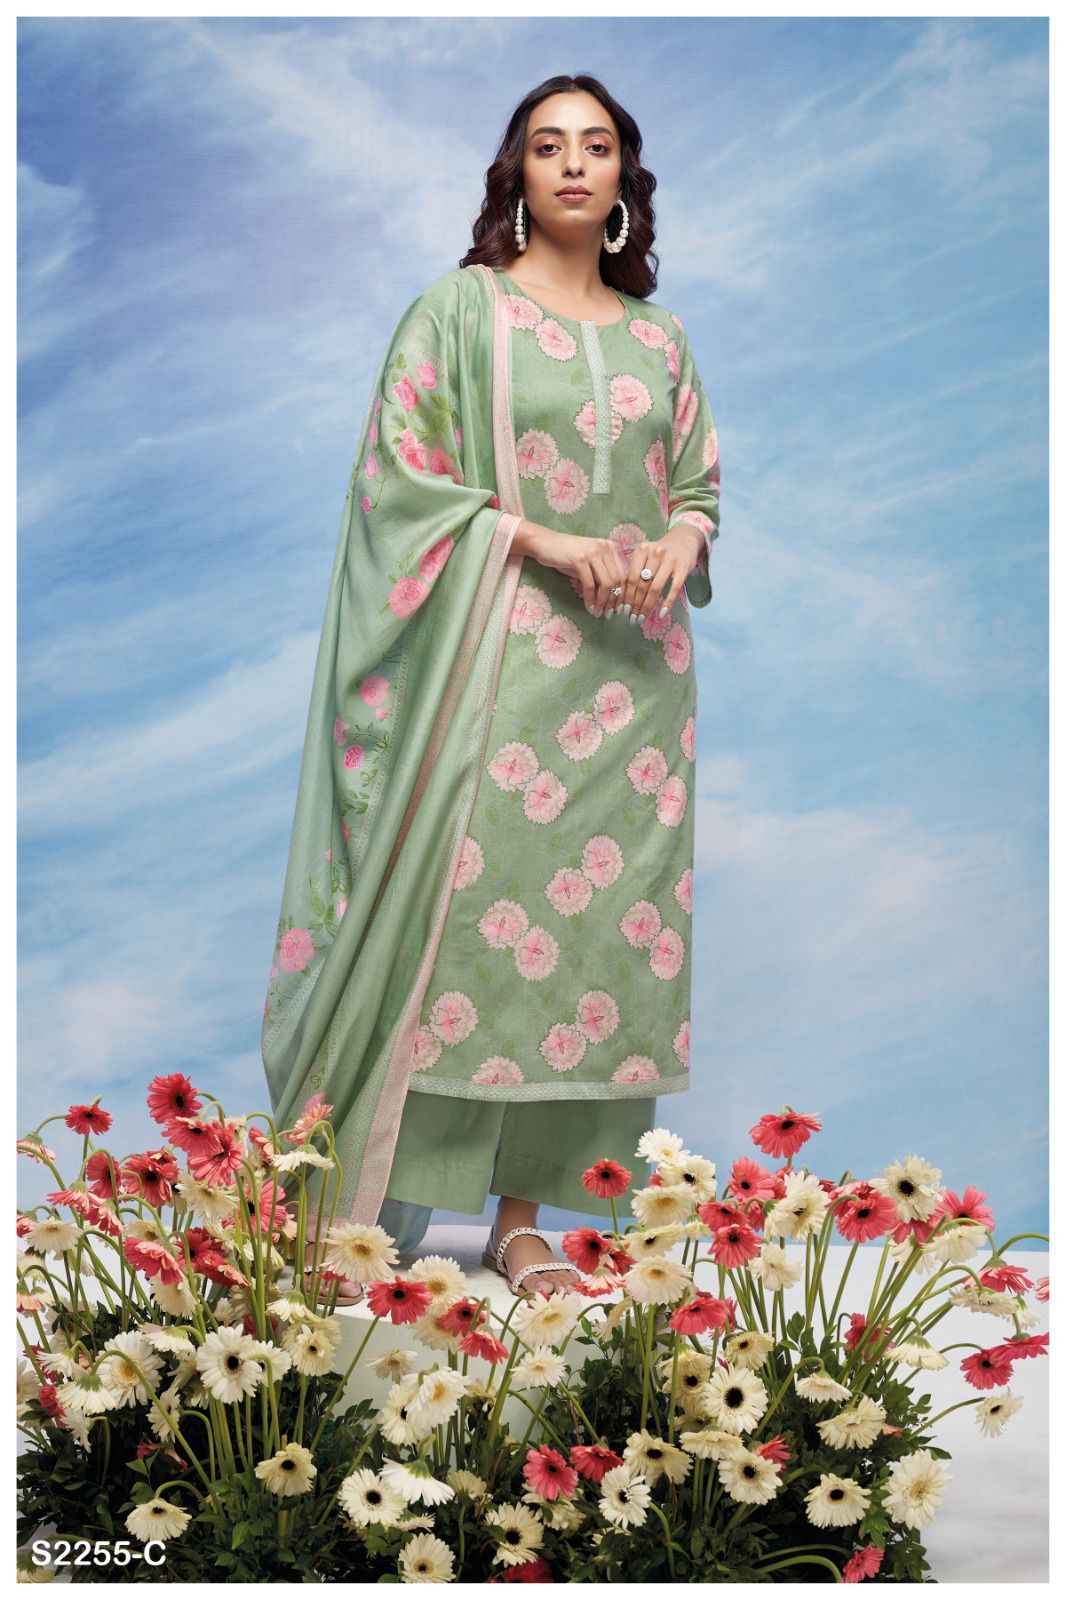 Ganga Tira Premium Cotton Printed Dress Material (4 Pc Catalog)